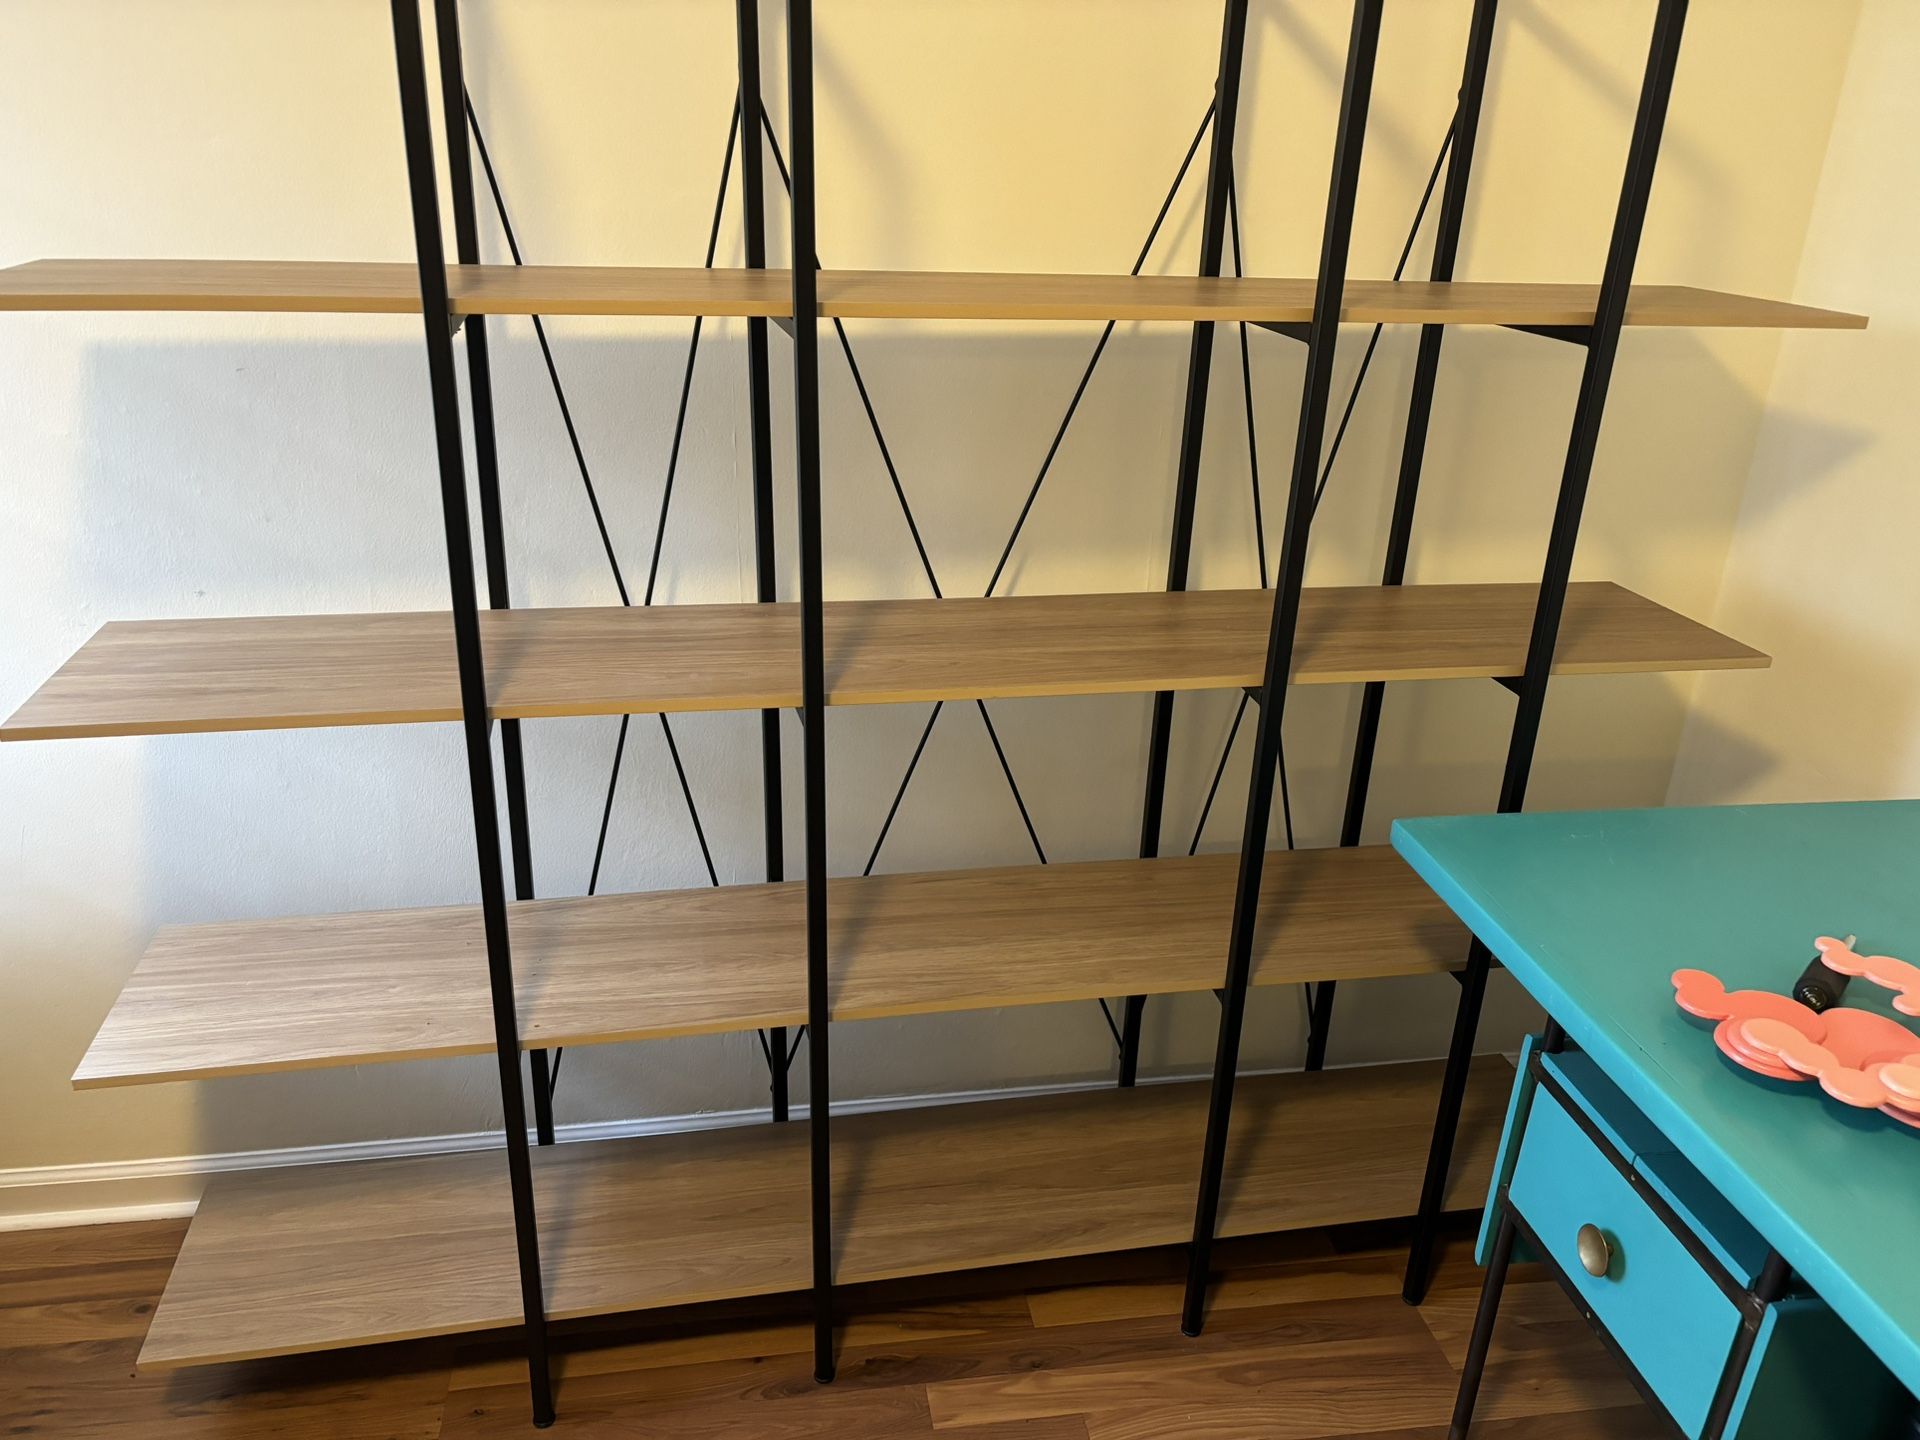 2 Bookcases / Shelving Units